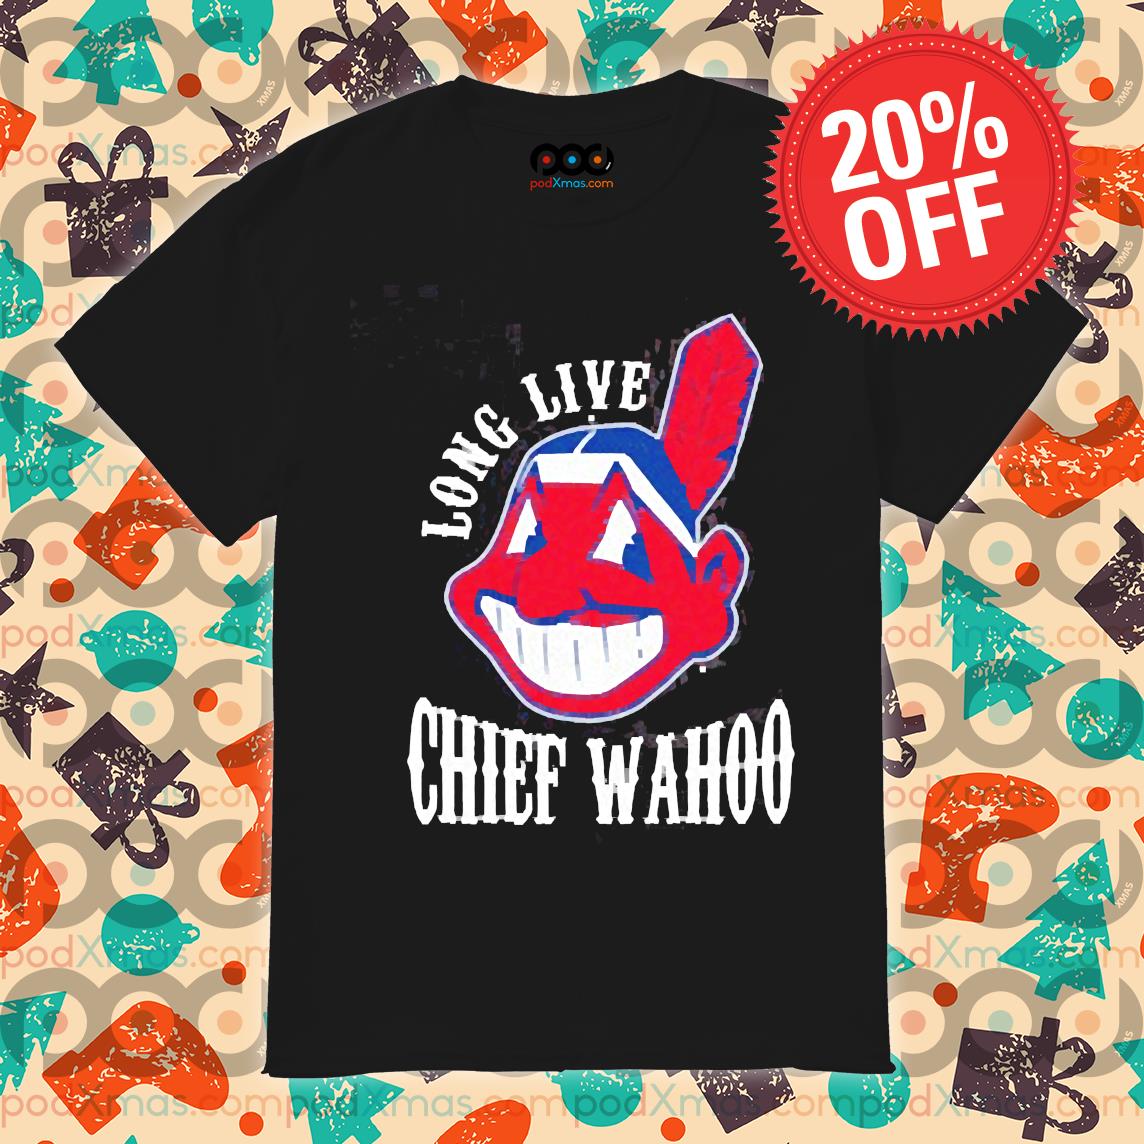 Get Long Live Chief wahoo shirt For Free Shipping • PodXmas